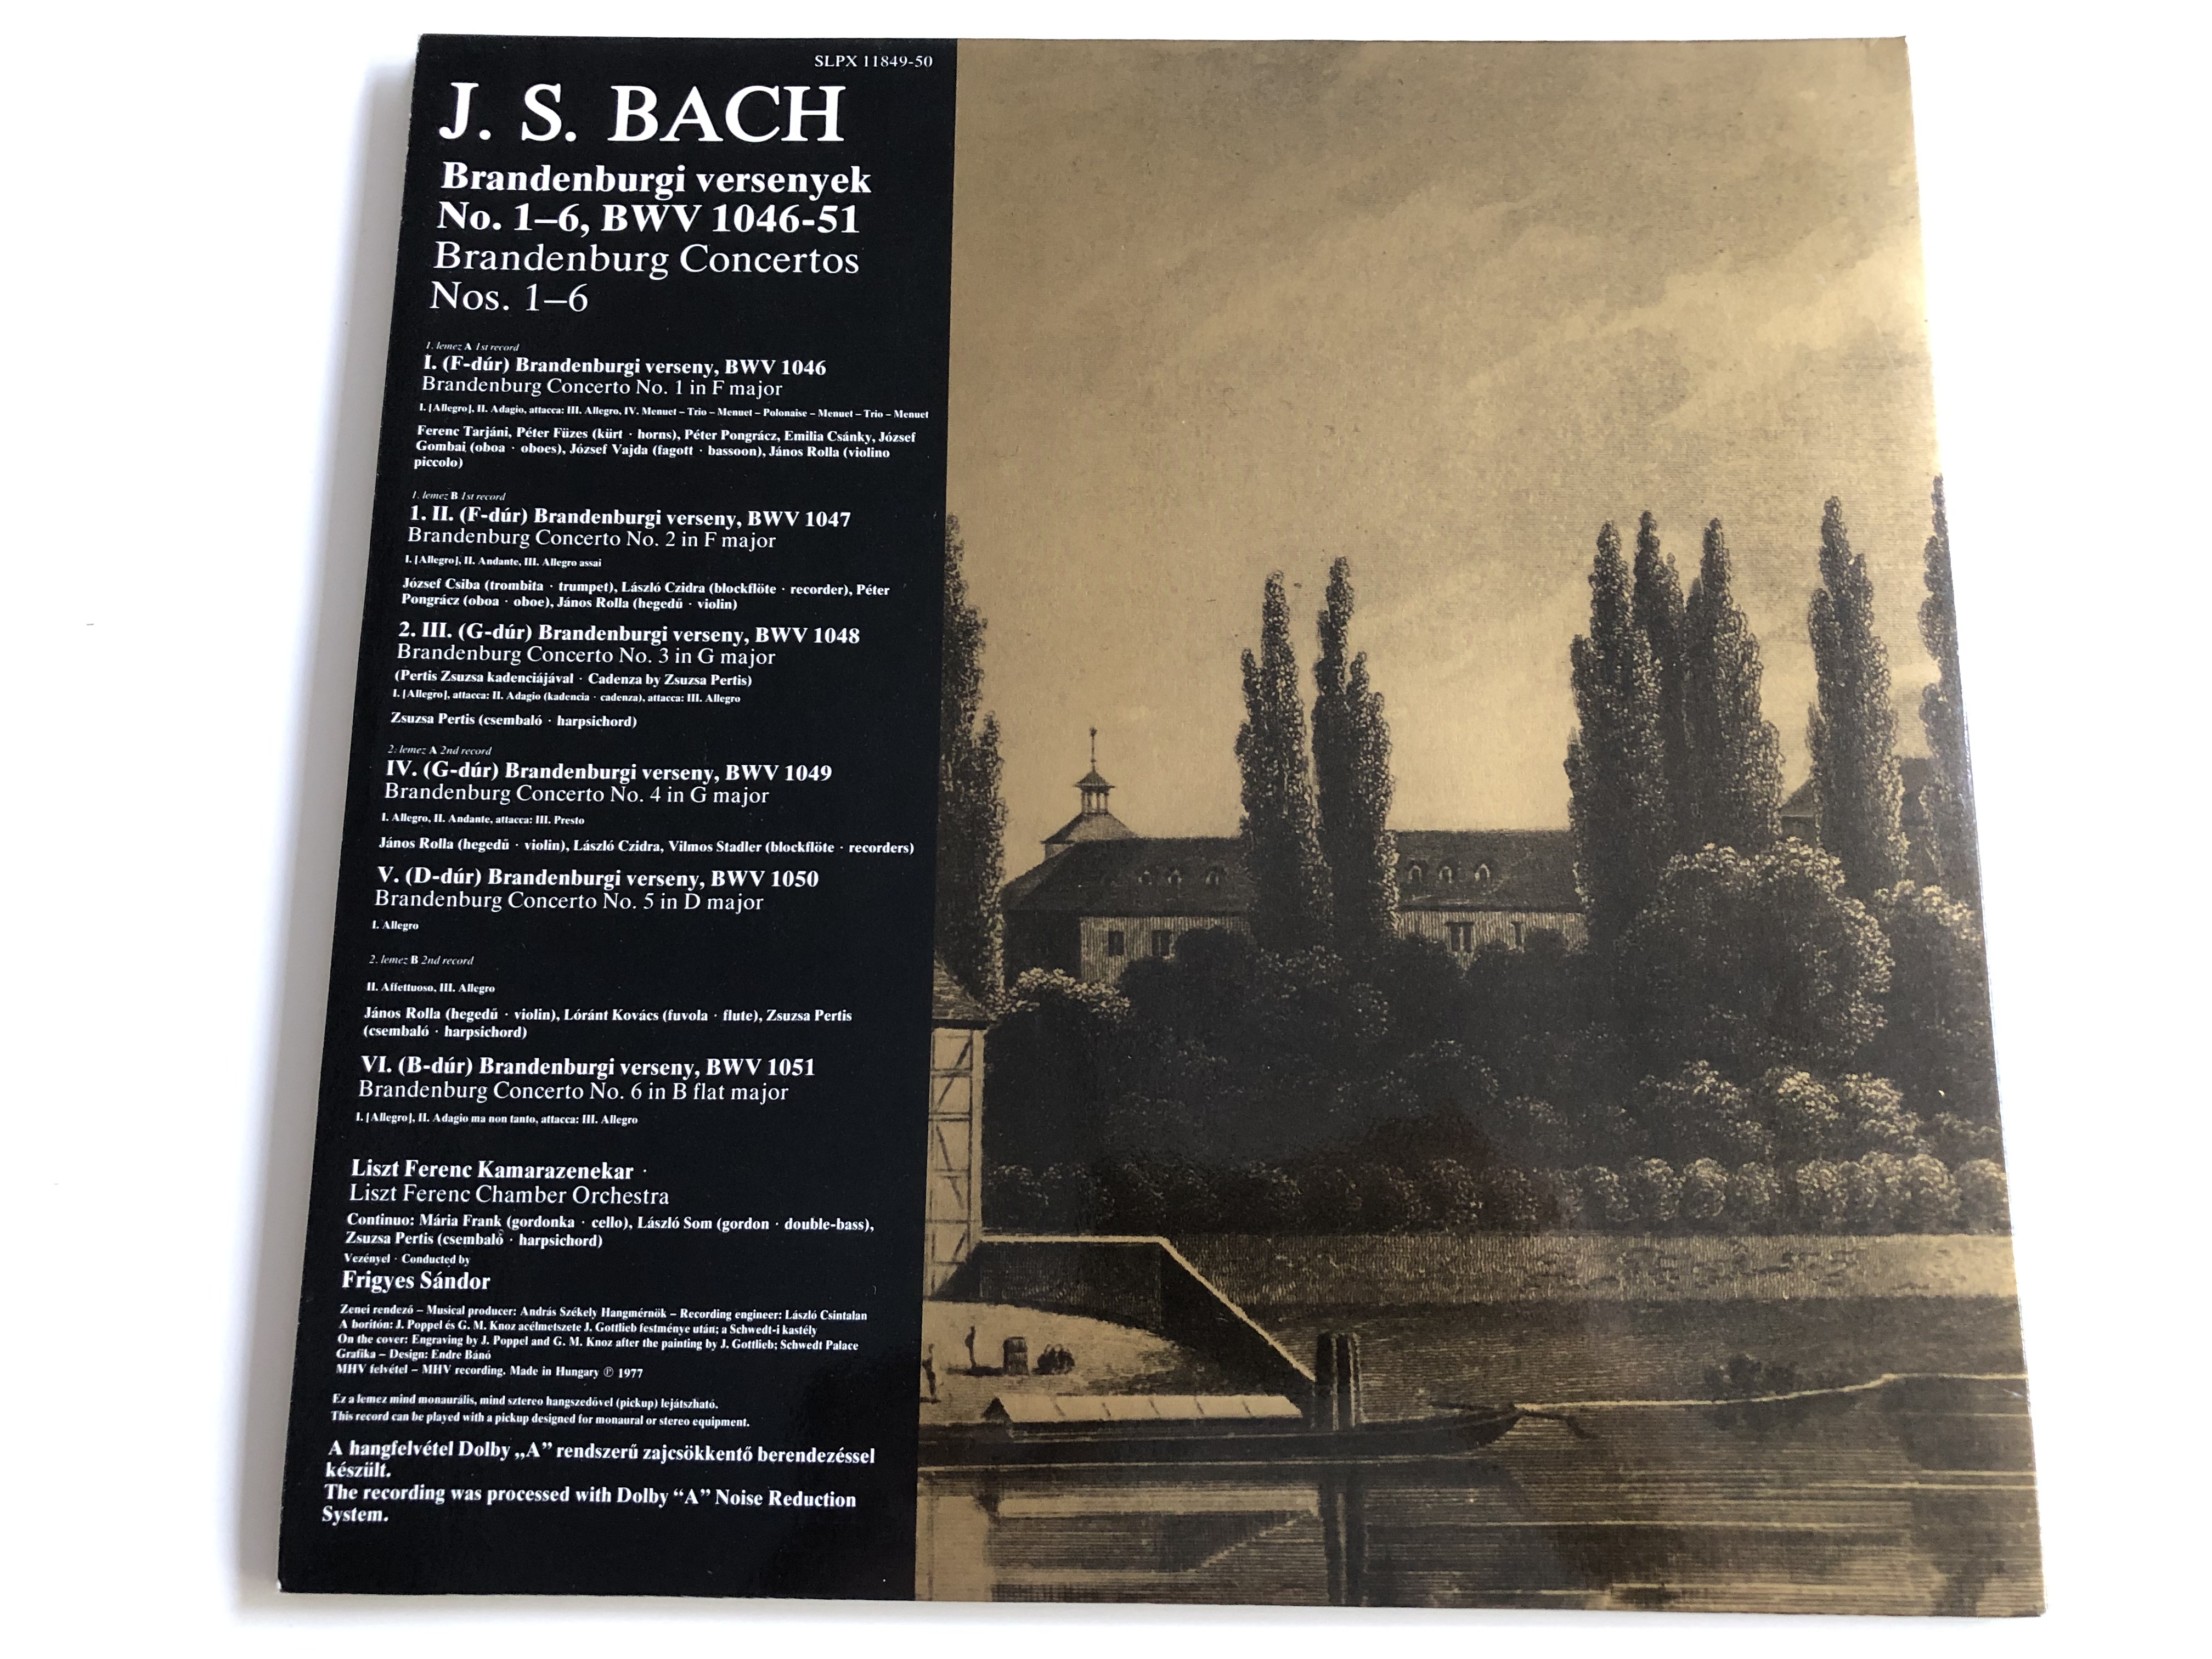 j.s.-bach-brandenburg-concertos-nos.-1-6-conducted-frigyes-s-ndor-liszt-ferenc-chamber-orchestra-hungaroton-2x-lp-stereo-mono-slpx-11849-50-4-.jpg